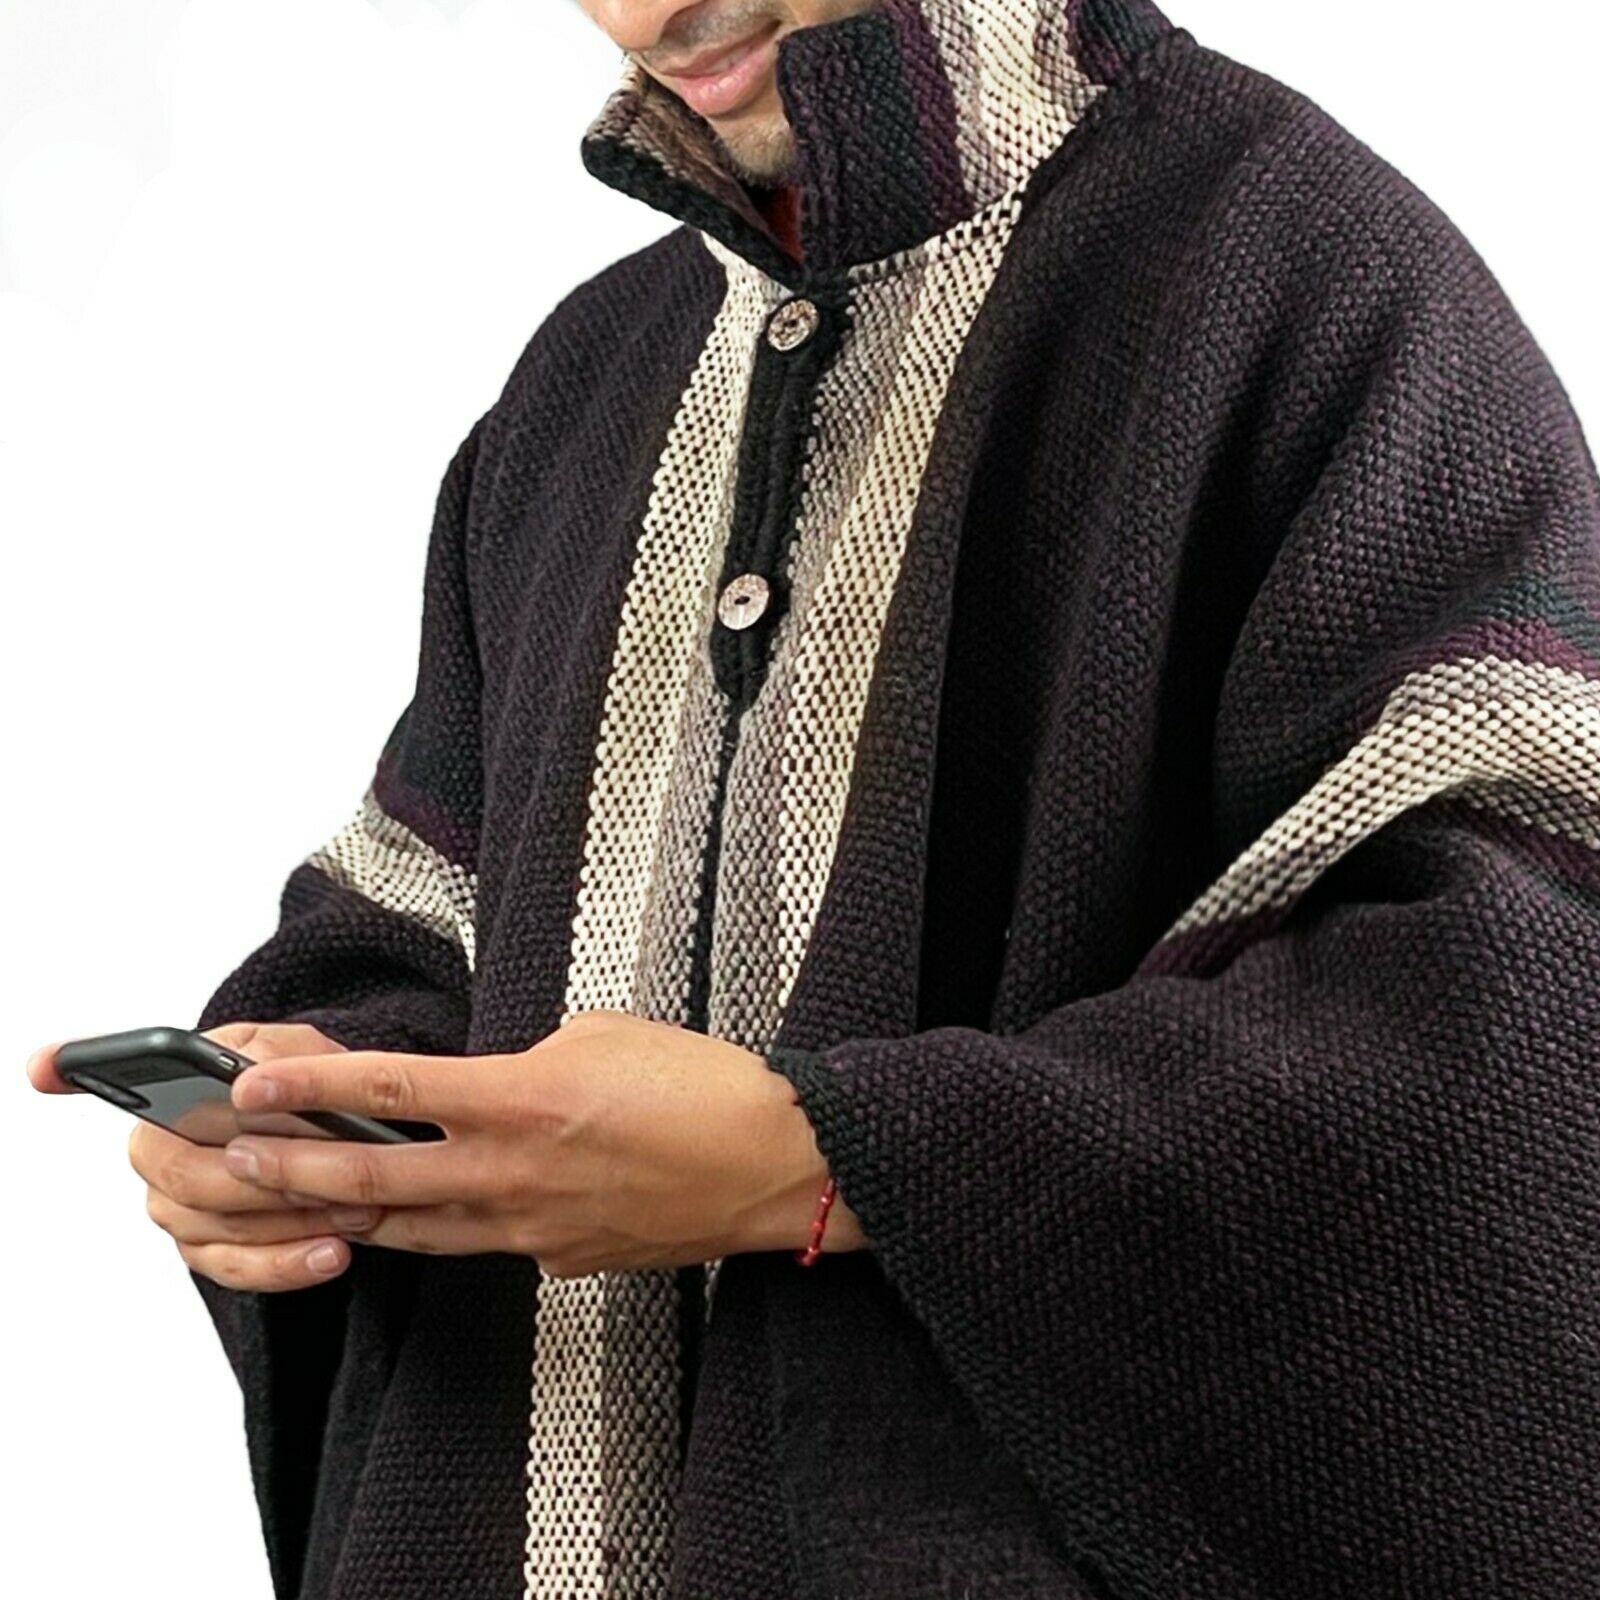 Nunkui - Llama Wool Unisex South American Handwoven Wide Thick Serape Poncho - striped pattern